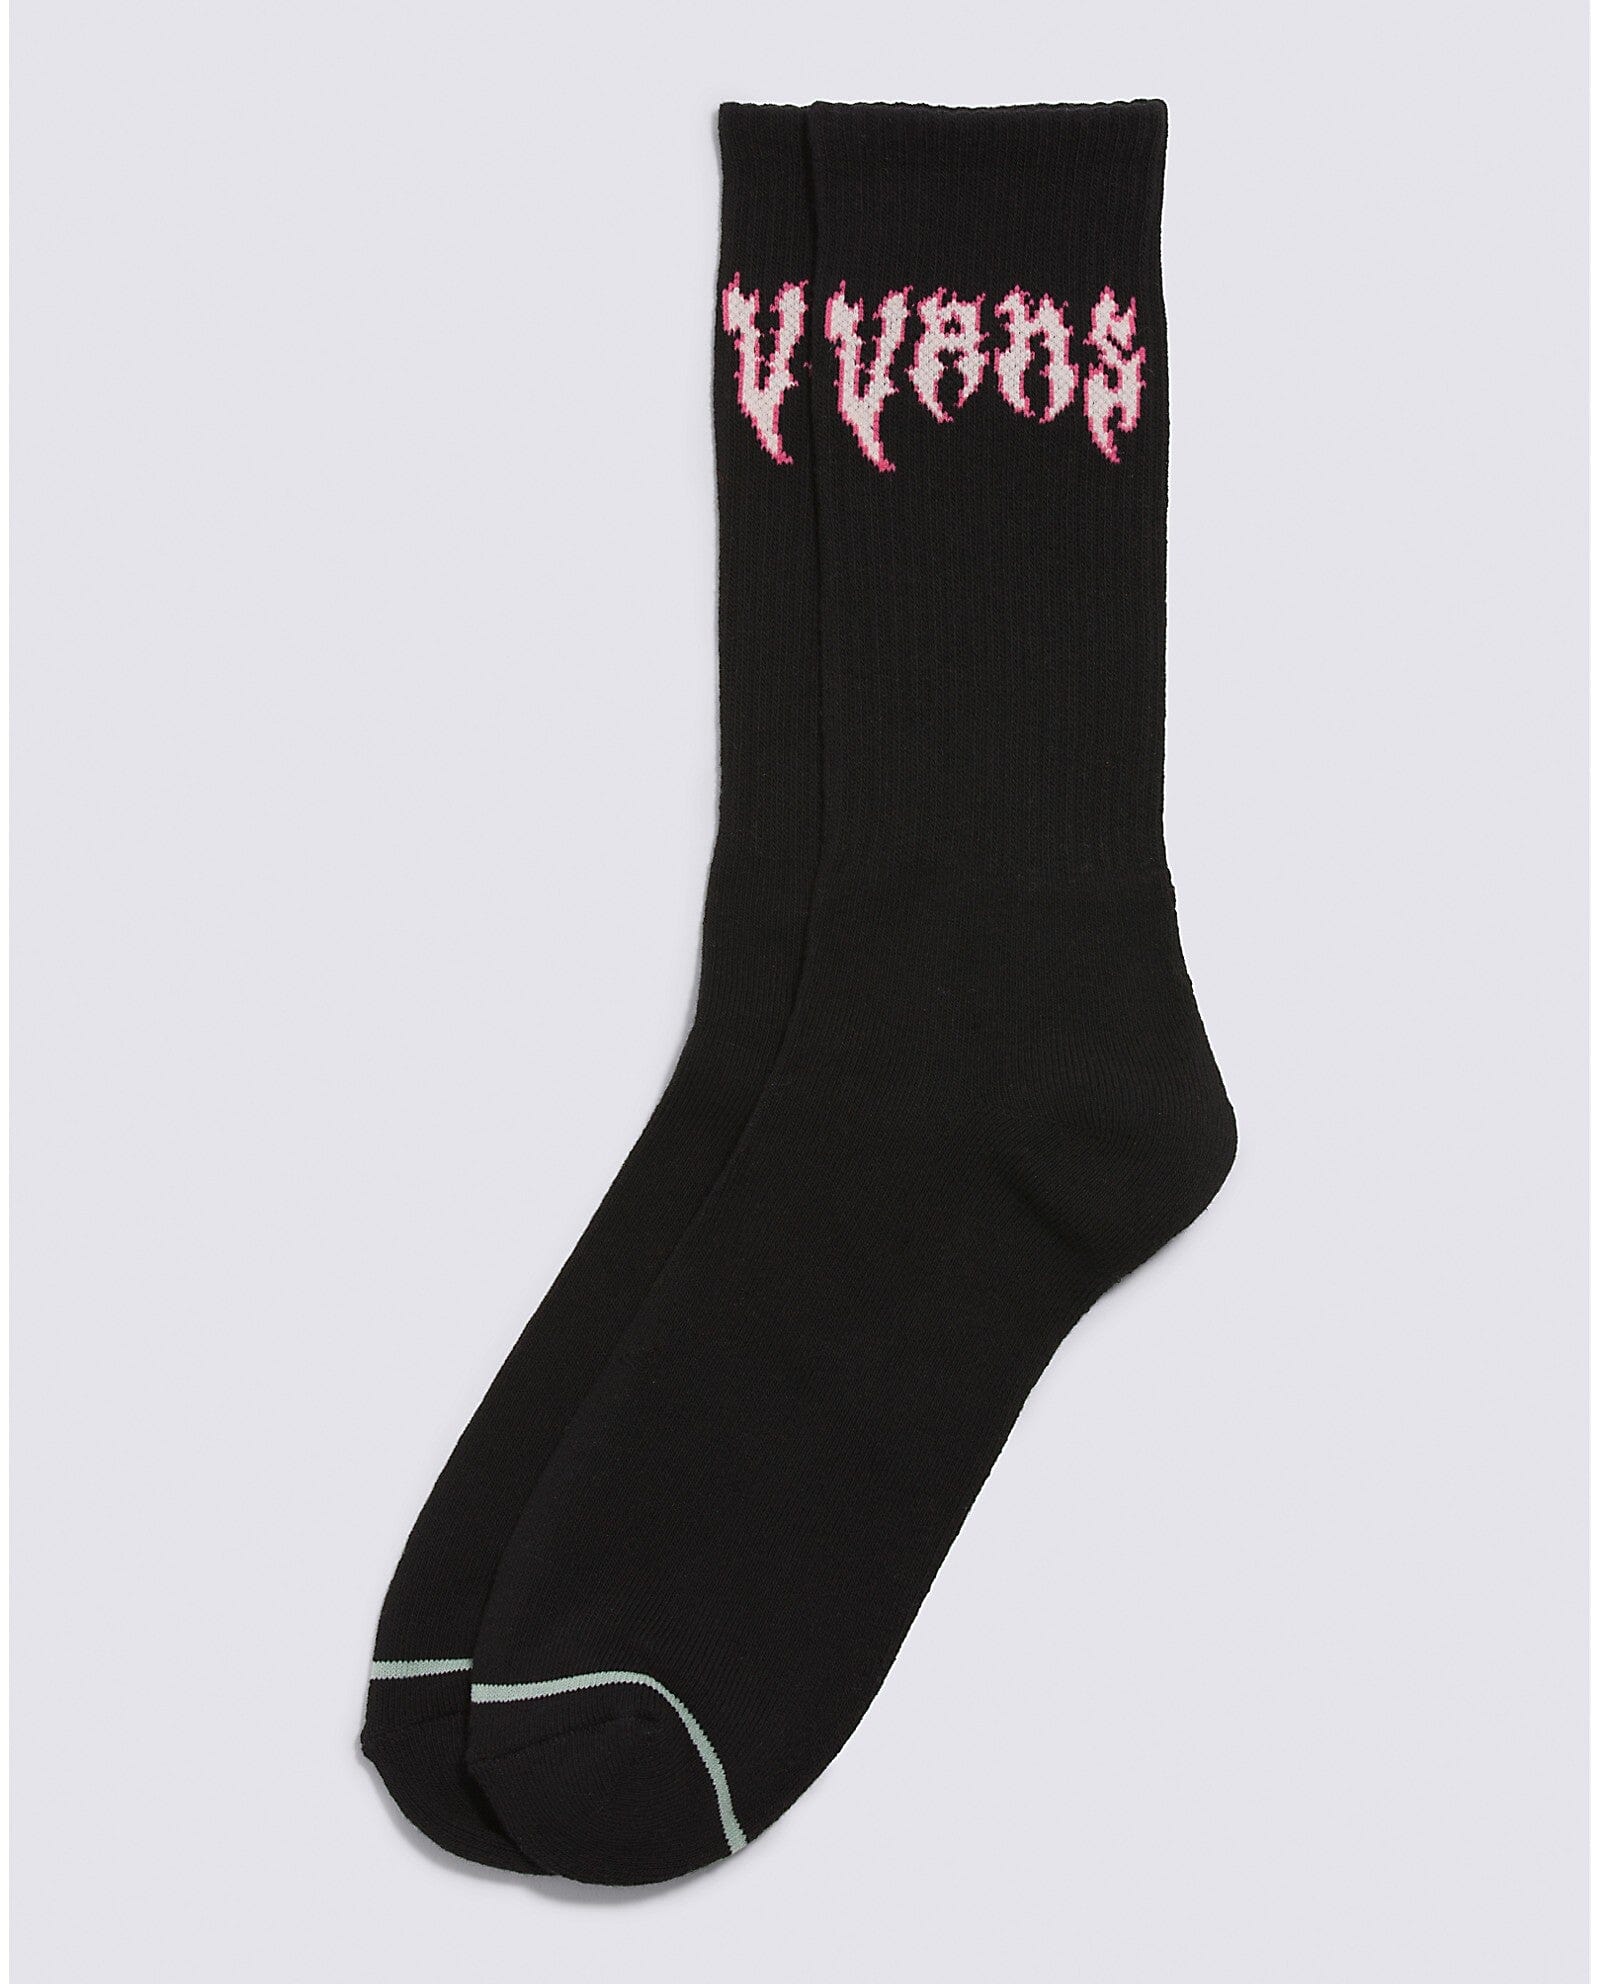 Men's Socks - Fun Socks and Stance Socks - Freeride Boardshop